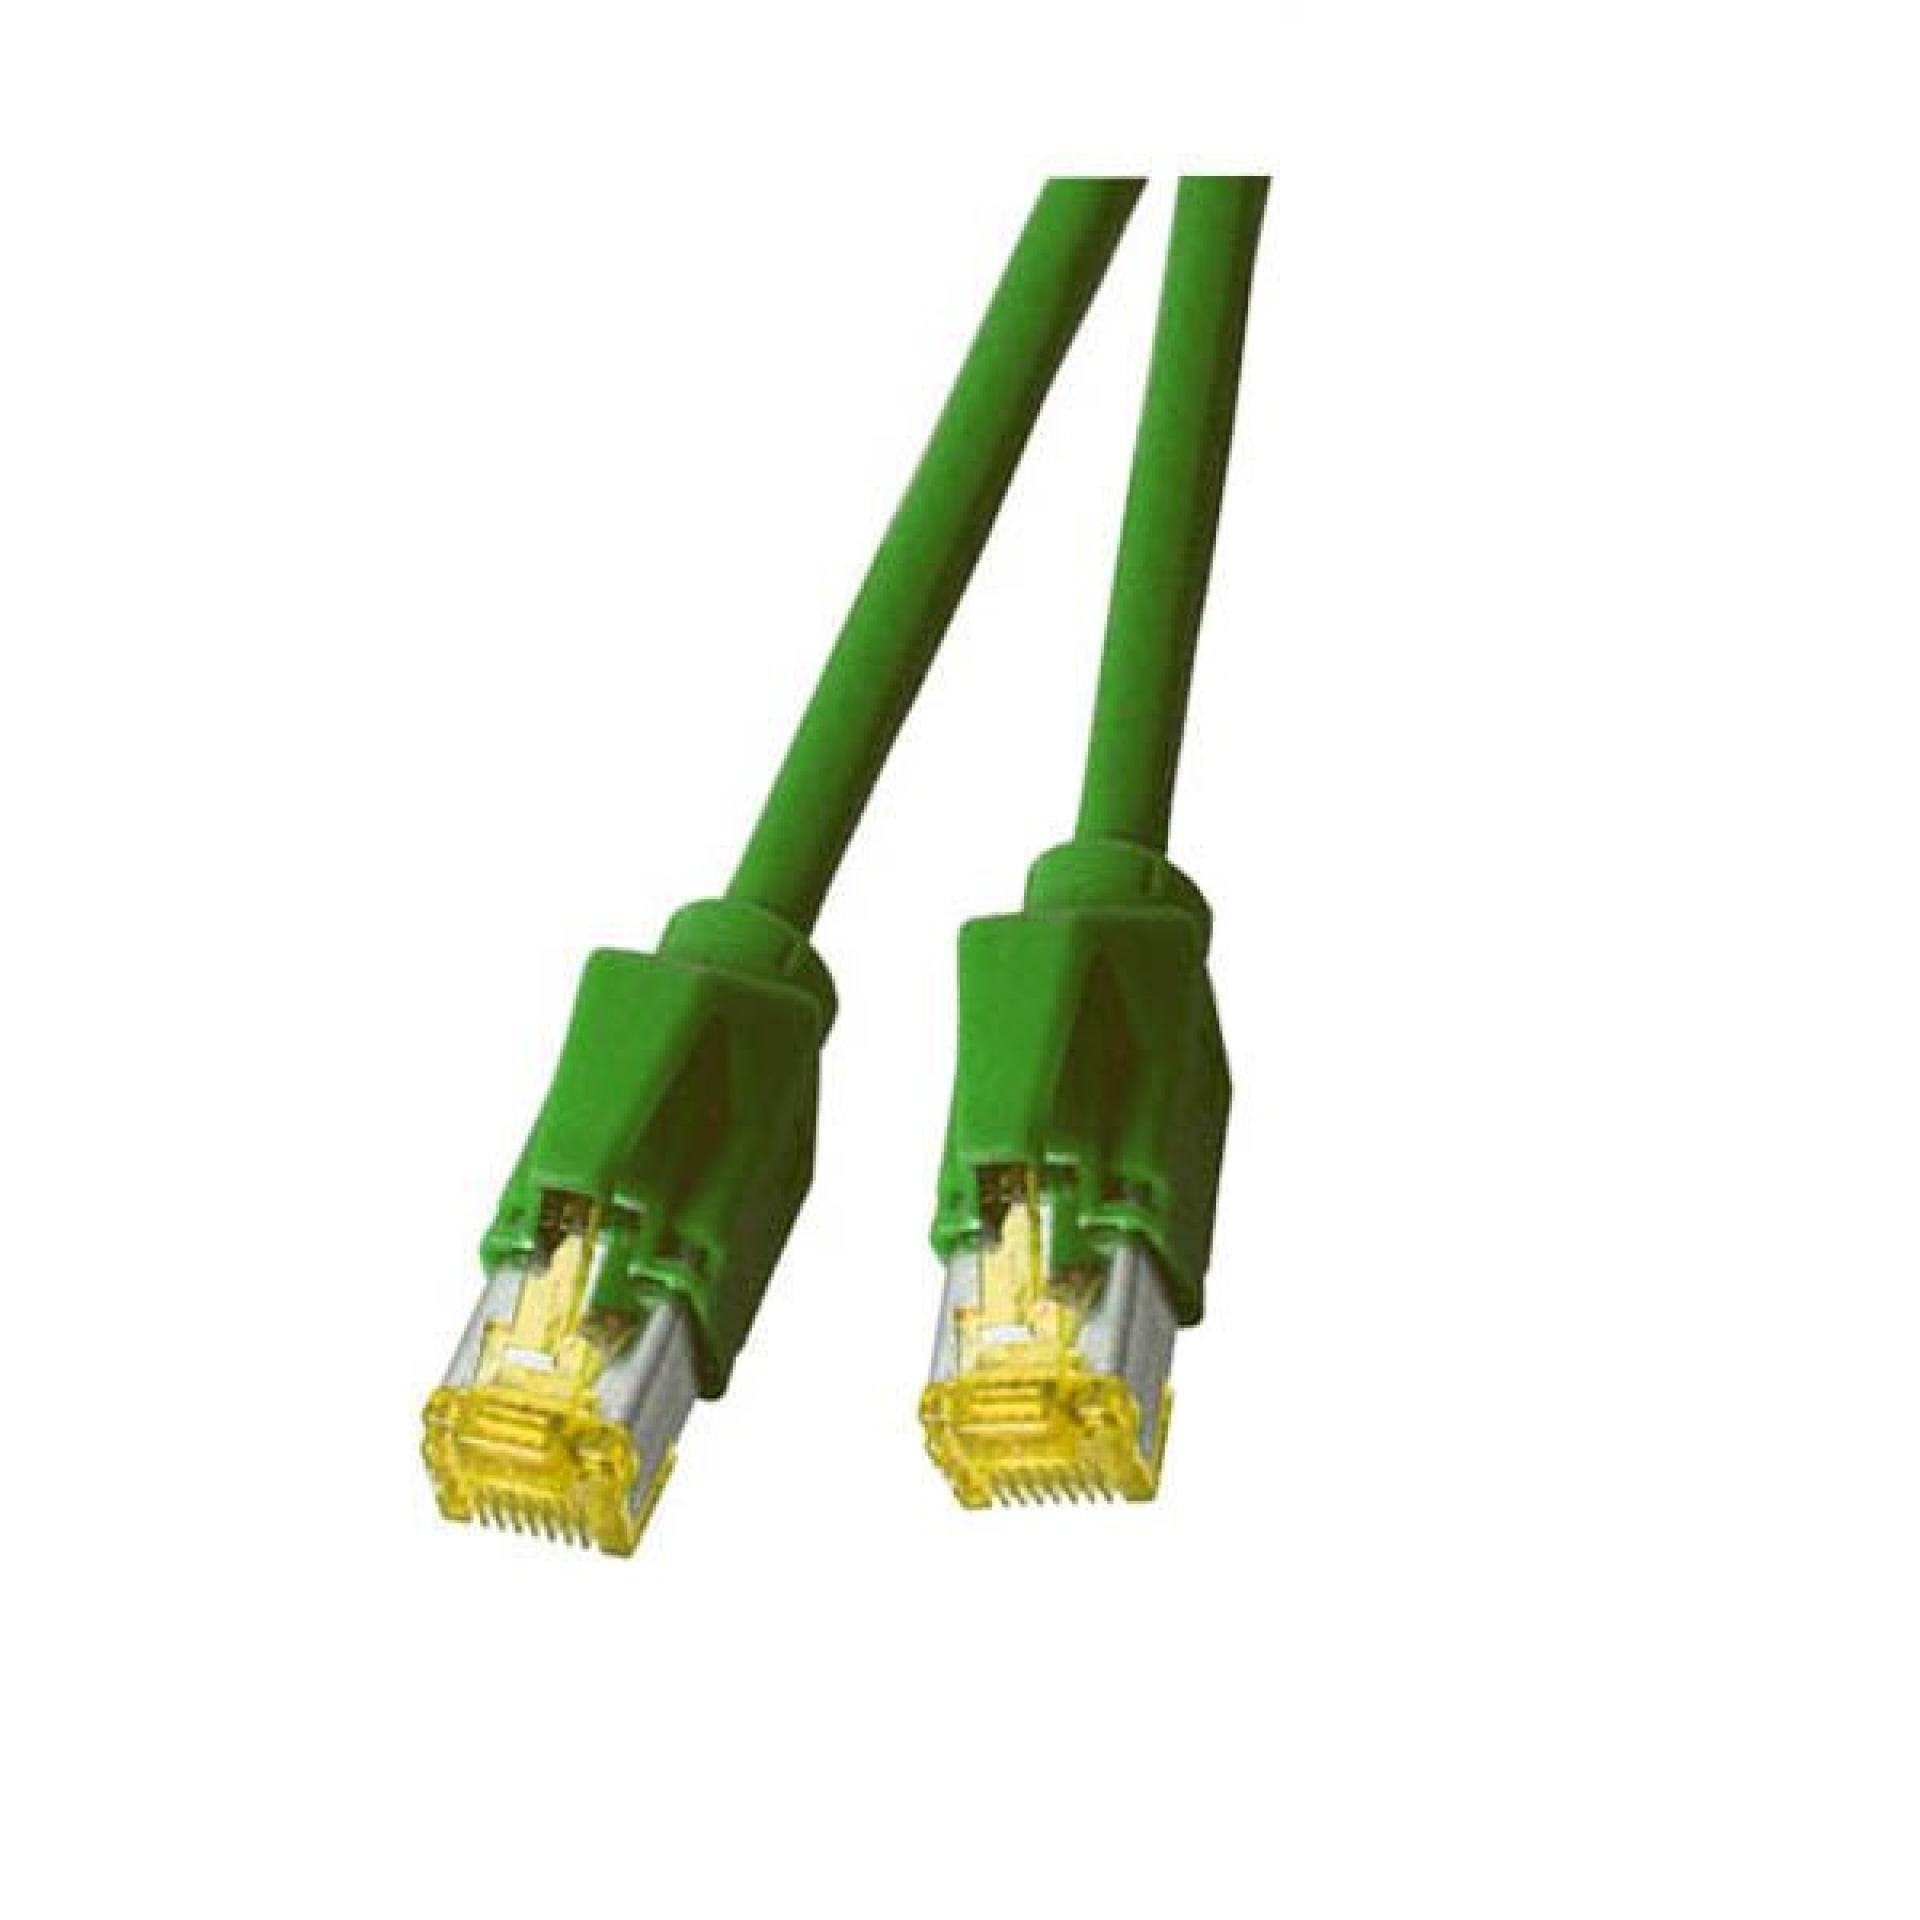 RJ45 Patch cable S/FTP, Cat.6A, TM31, Dätwyler 7702, 0,5m, green